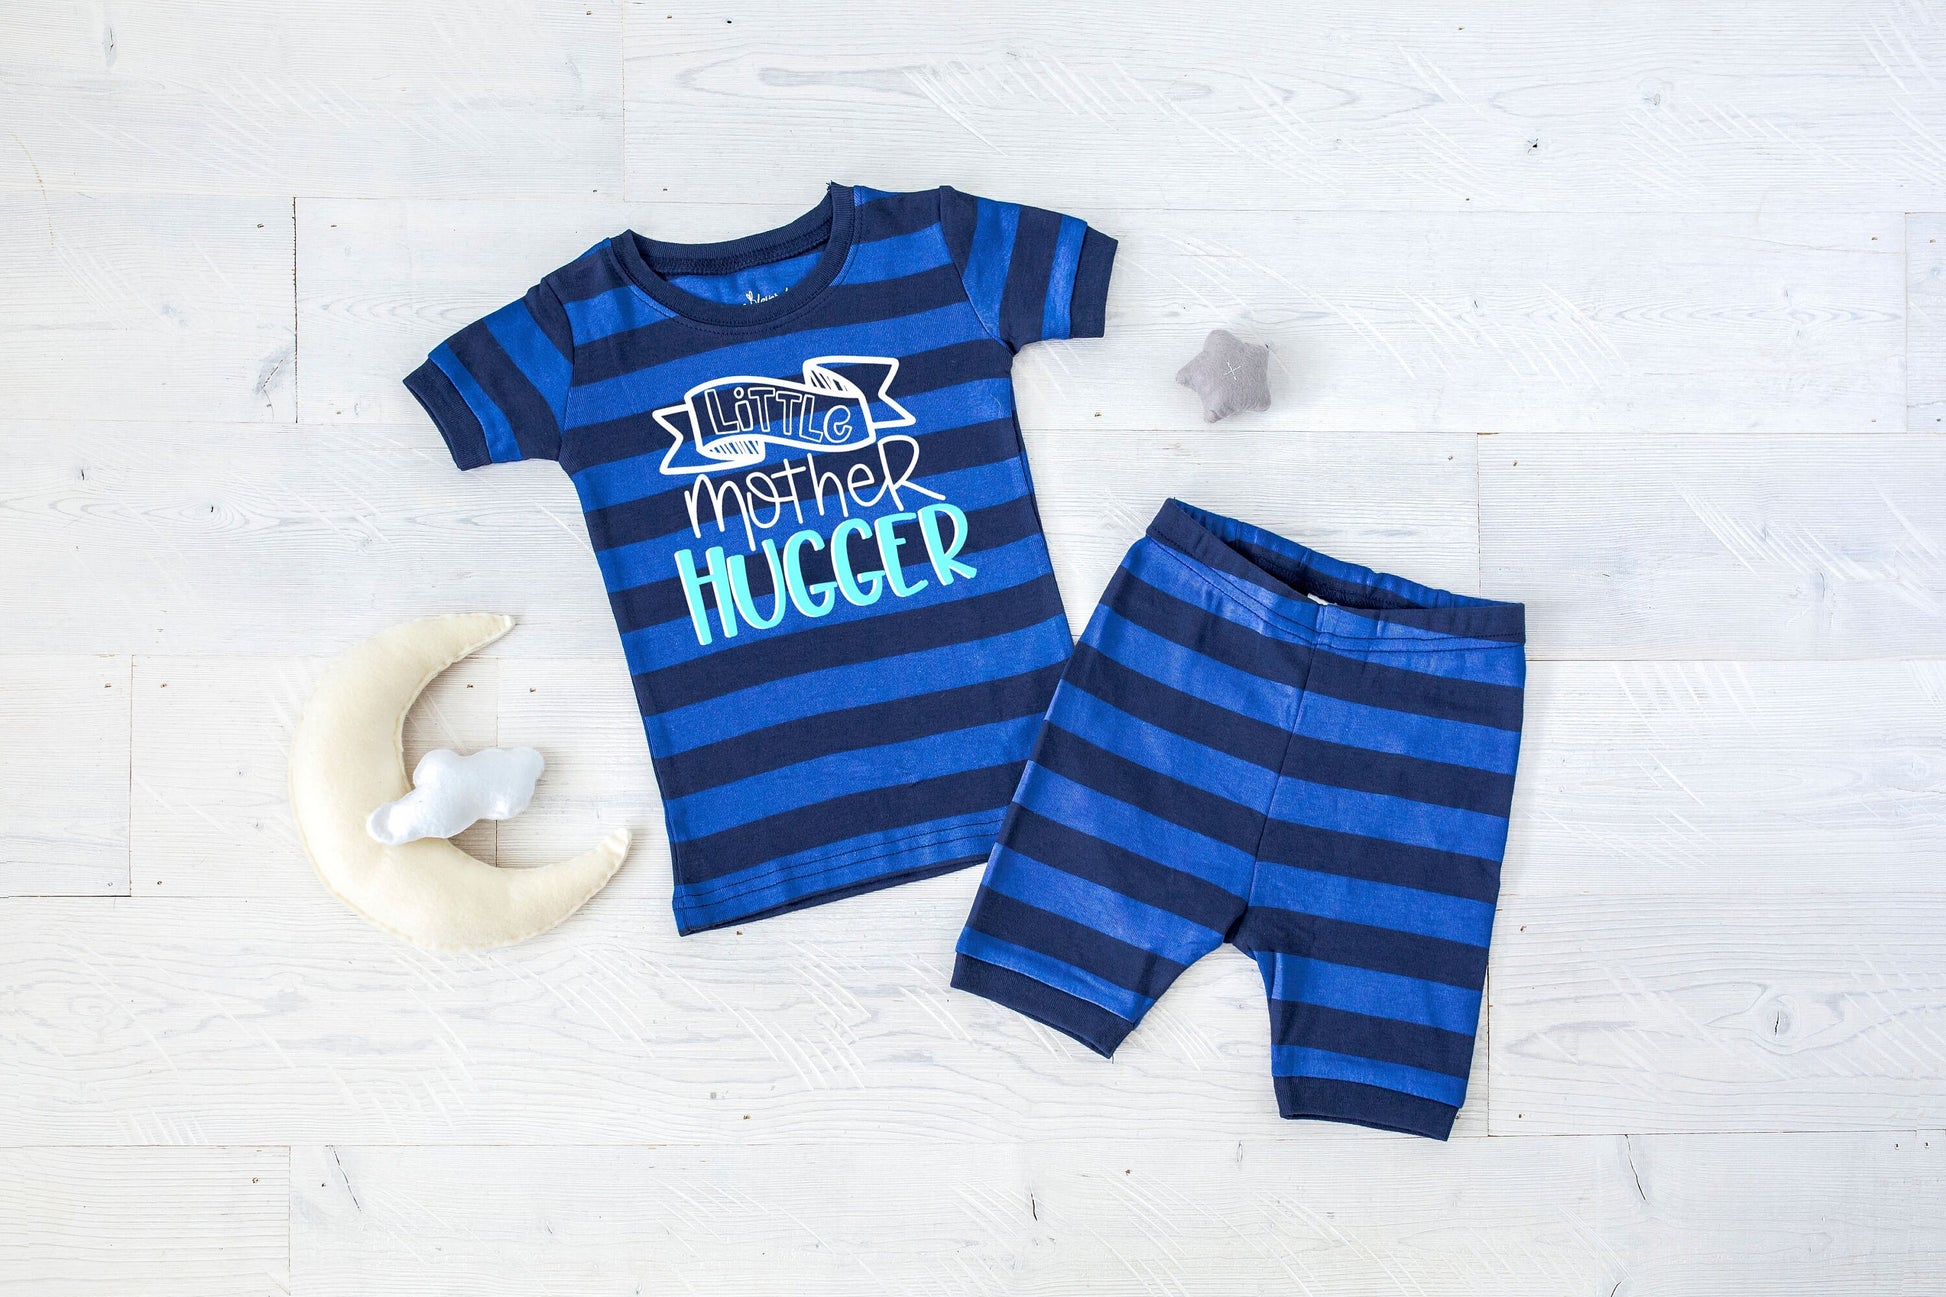 Little Mother Hugger Blue Striped Shorts Toddler and Youth Pajamas - Boys Pajamas - Sleepover Pajamas - Toddler Boy Summer Pajamas